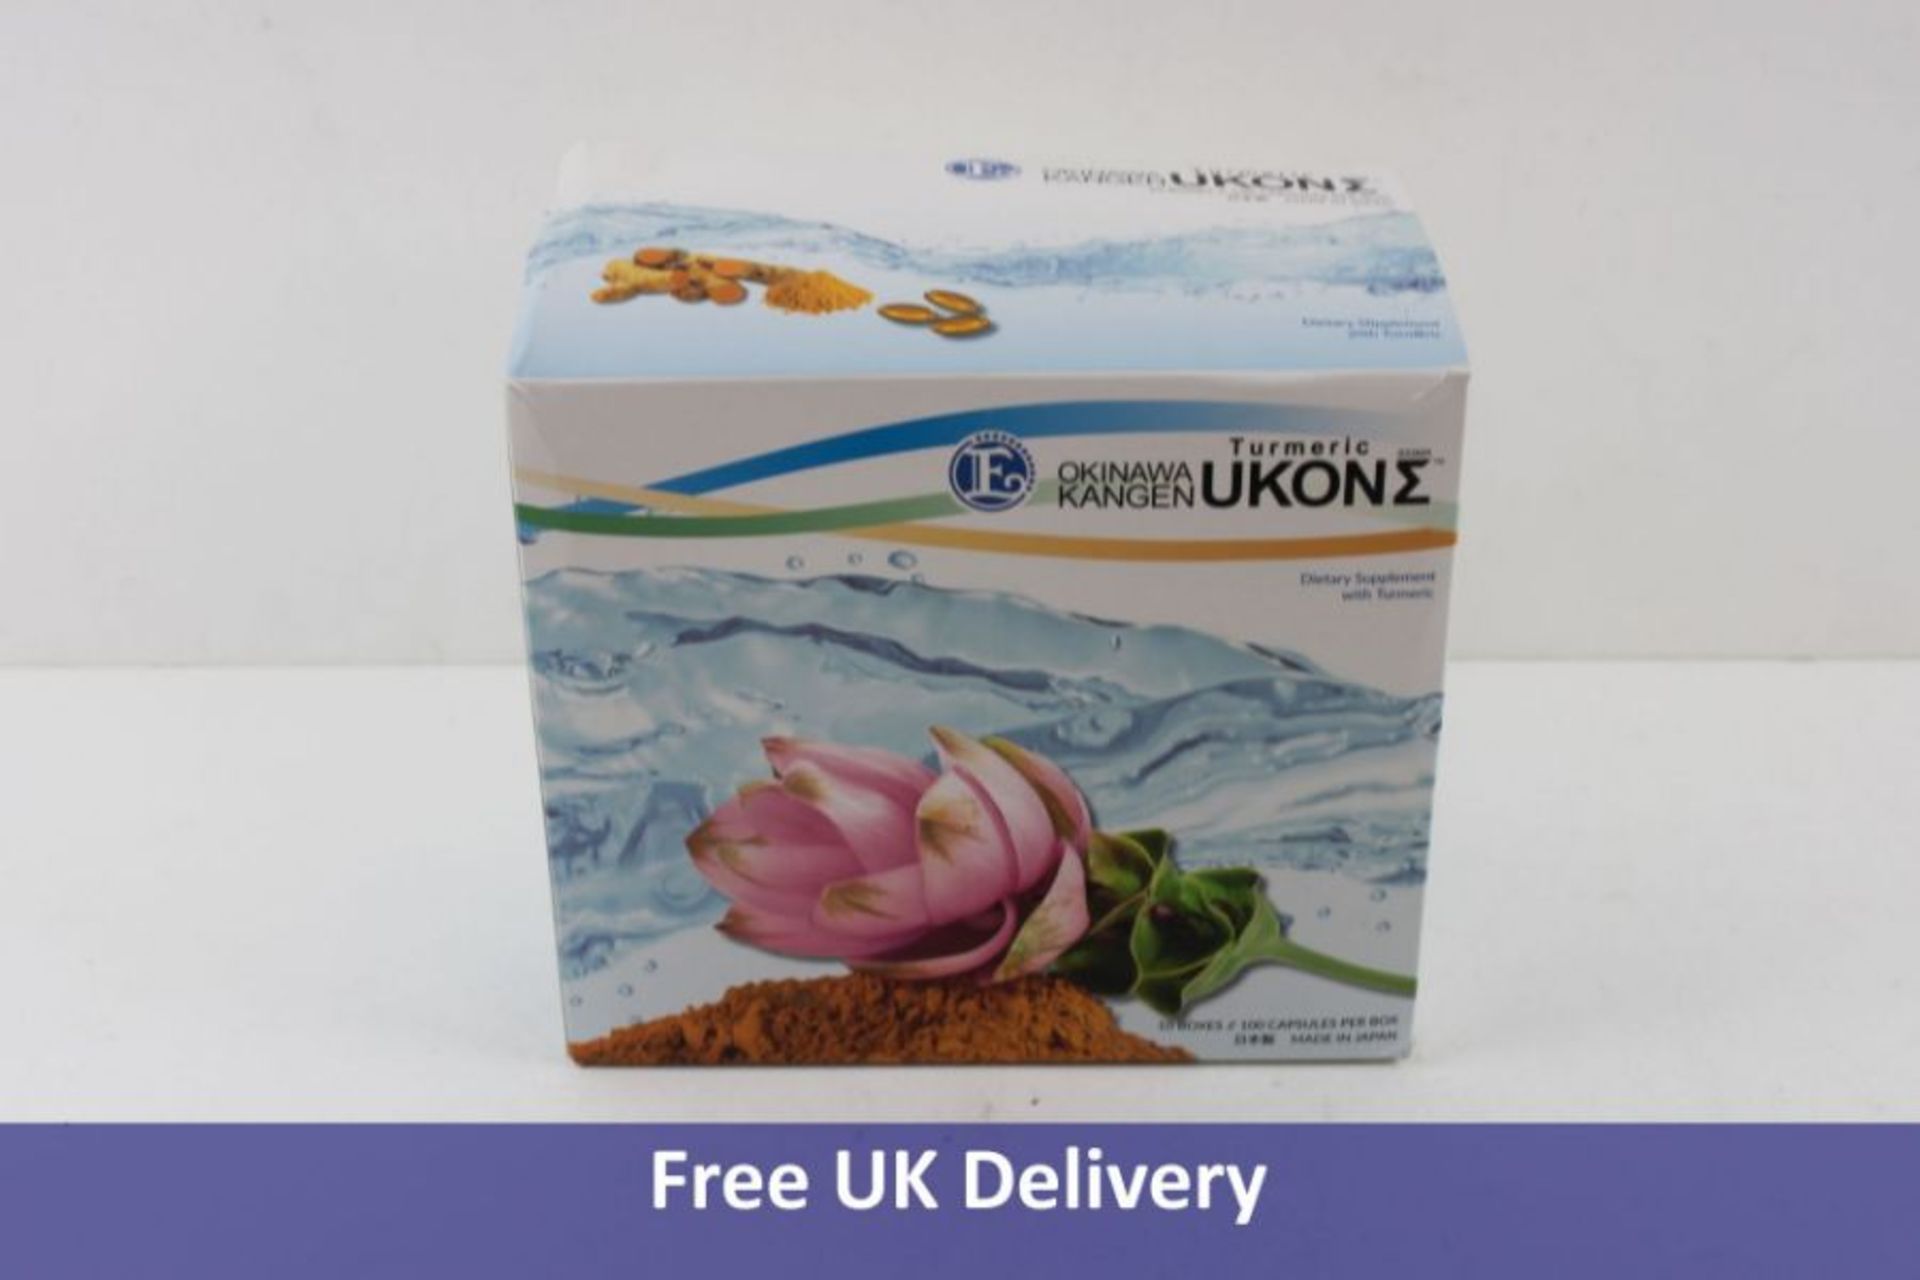 Ten Boxes of Kangen Ukon Sigma Turmeric Dietary Supplement, 100 Capsules per Box, EXP 02/24